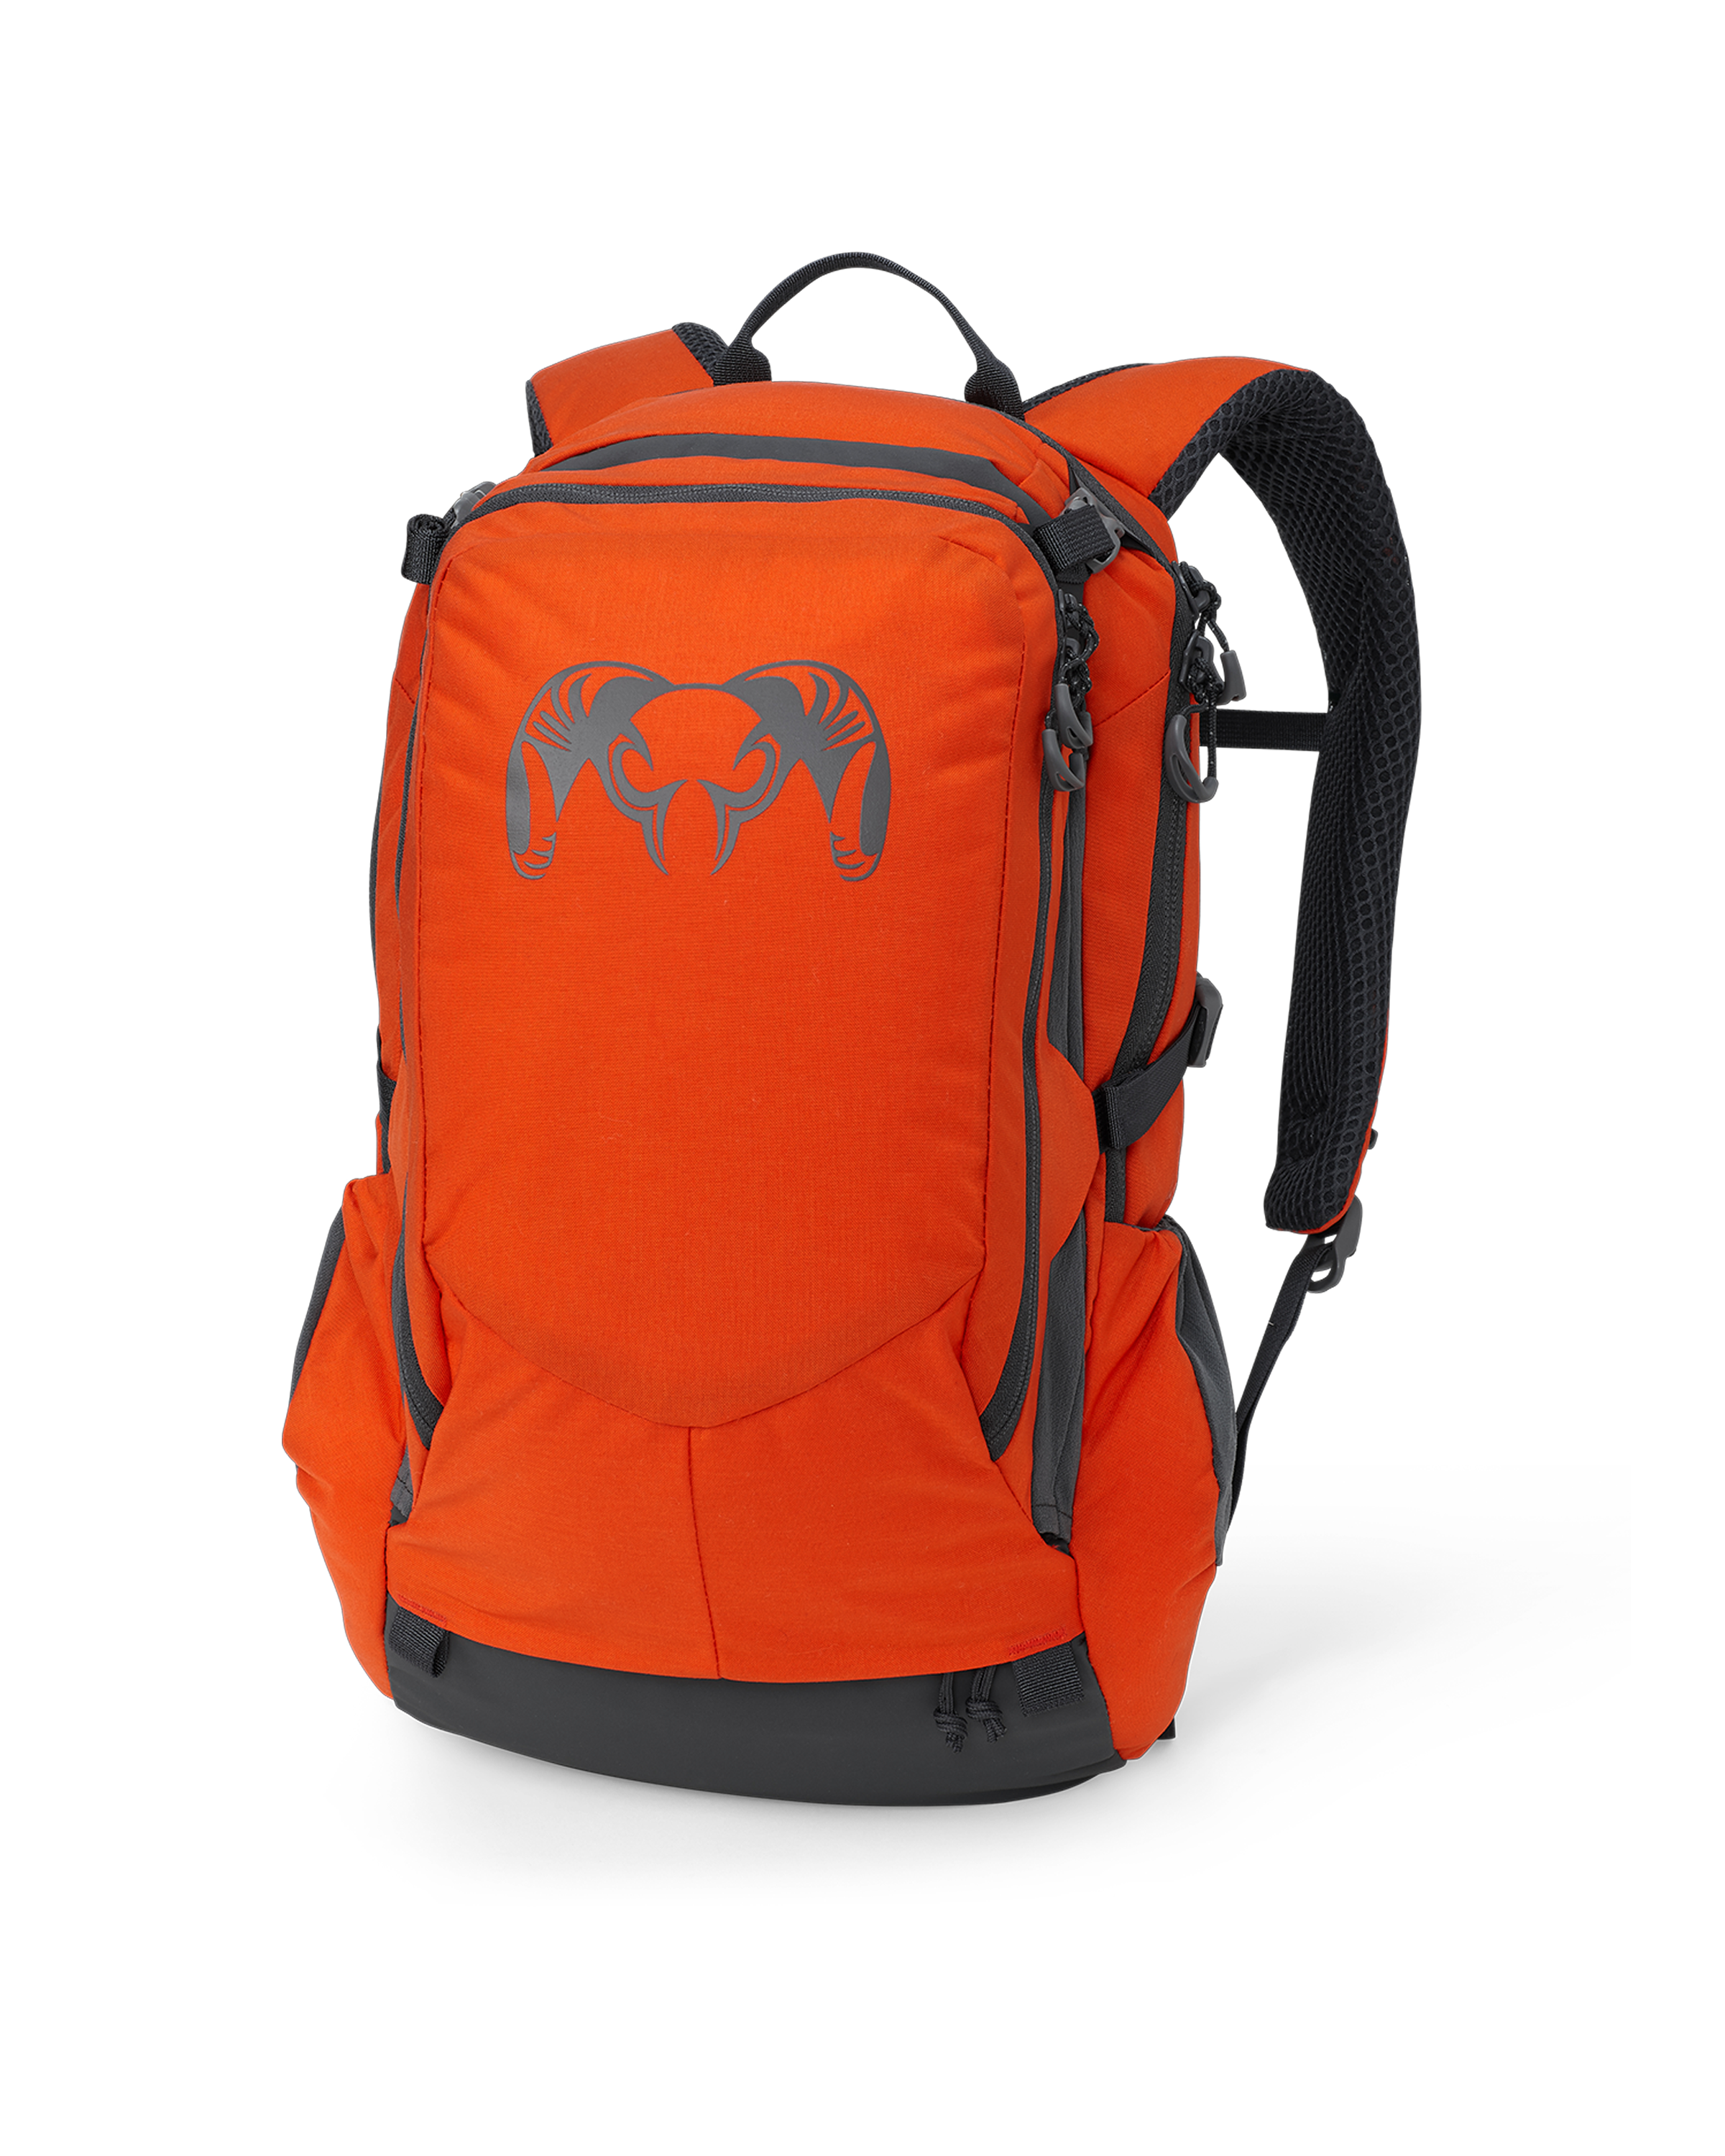 KUIU Divide 1200 Day Bag Pack in Orange Hunting Pack